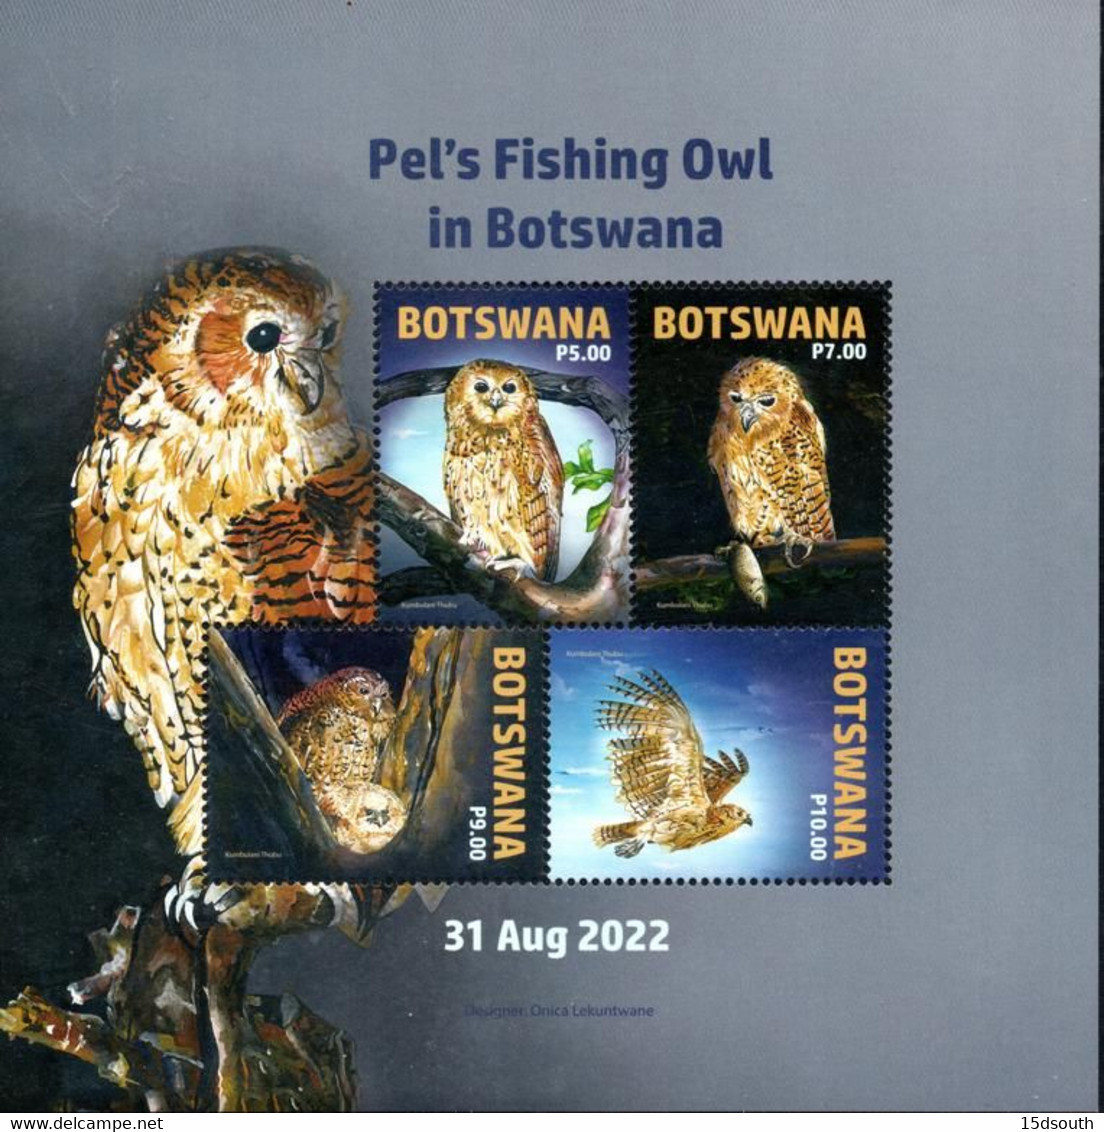 Botswana - 2022 Pel's Fishing Owl MS (**) - Eulenvögel